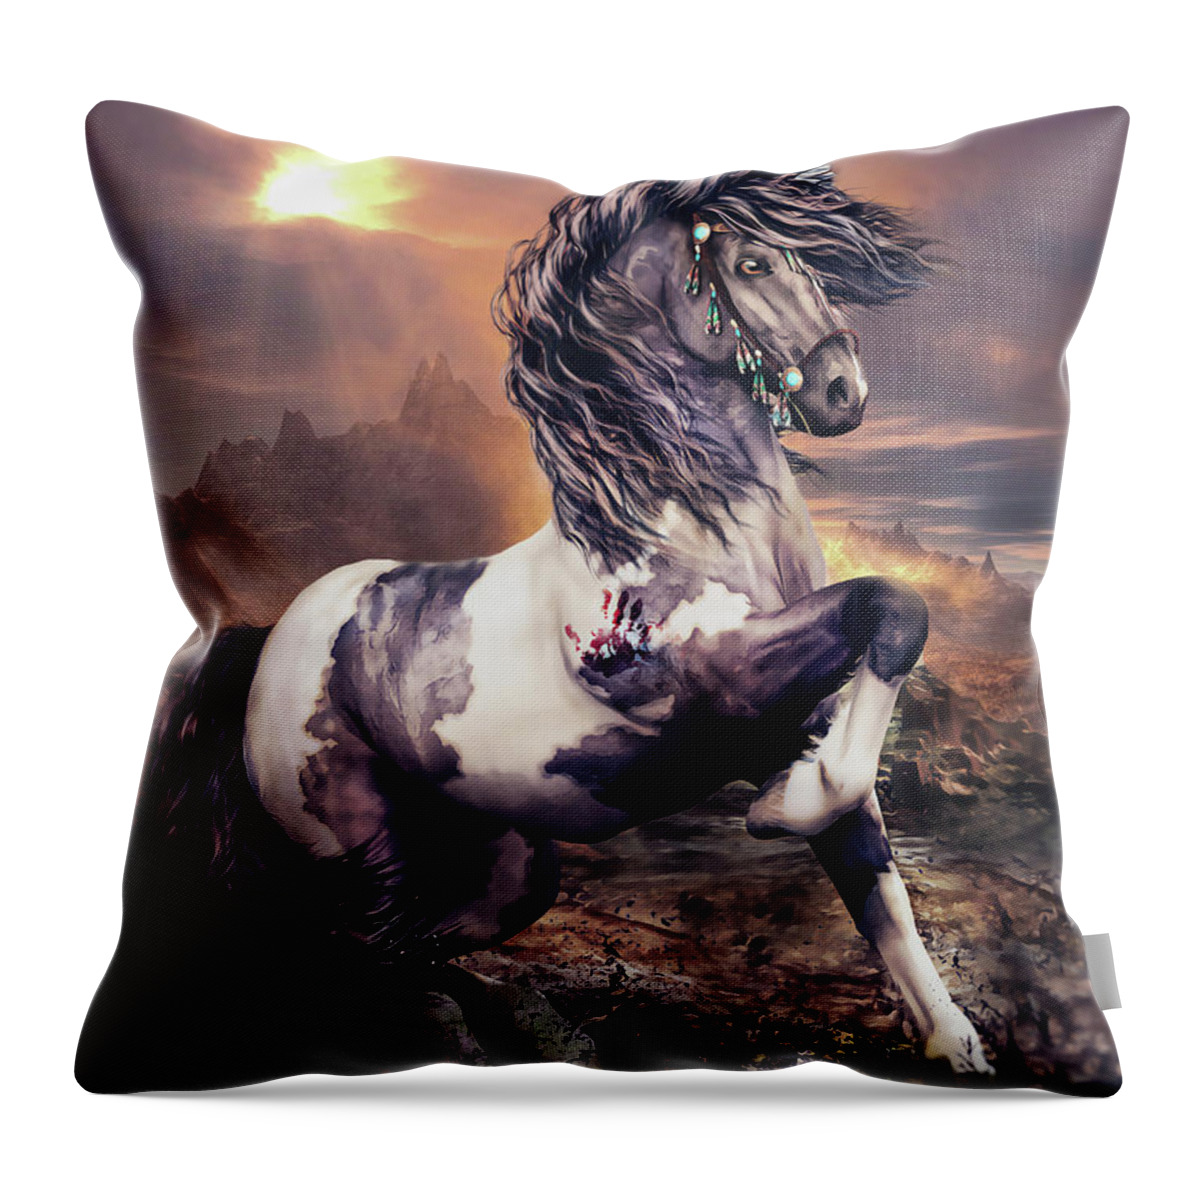 Apache War Horse Throw Pillow featuring the digital art Apache War Horse by Shanina Conway